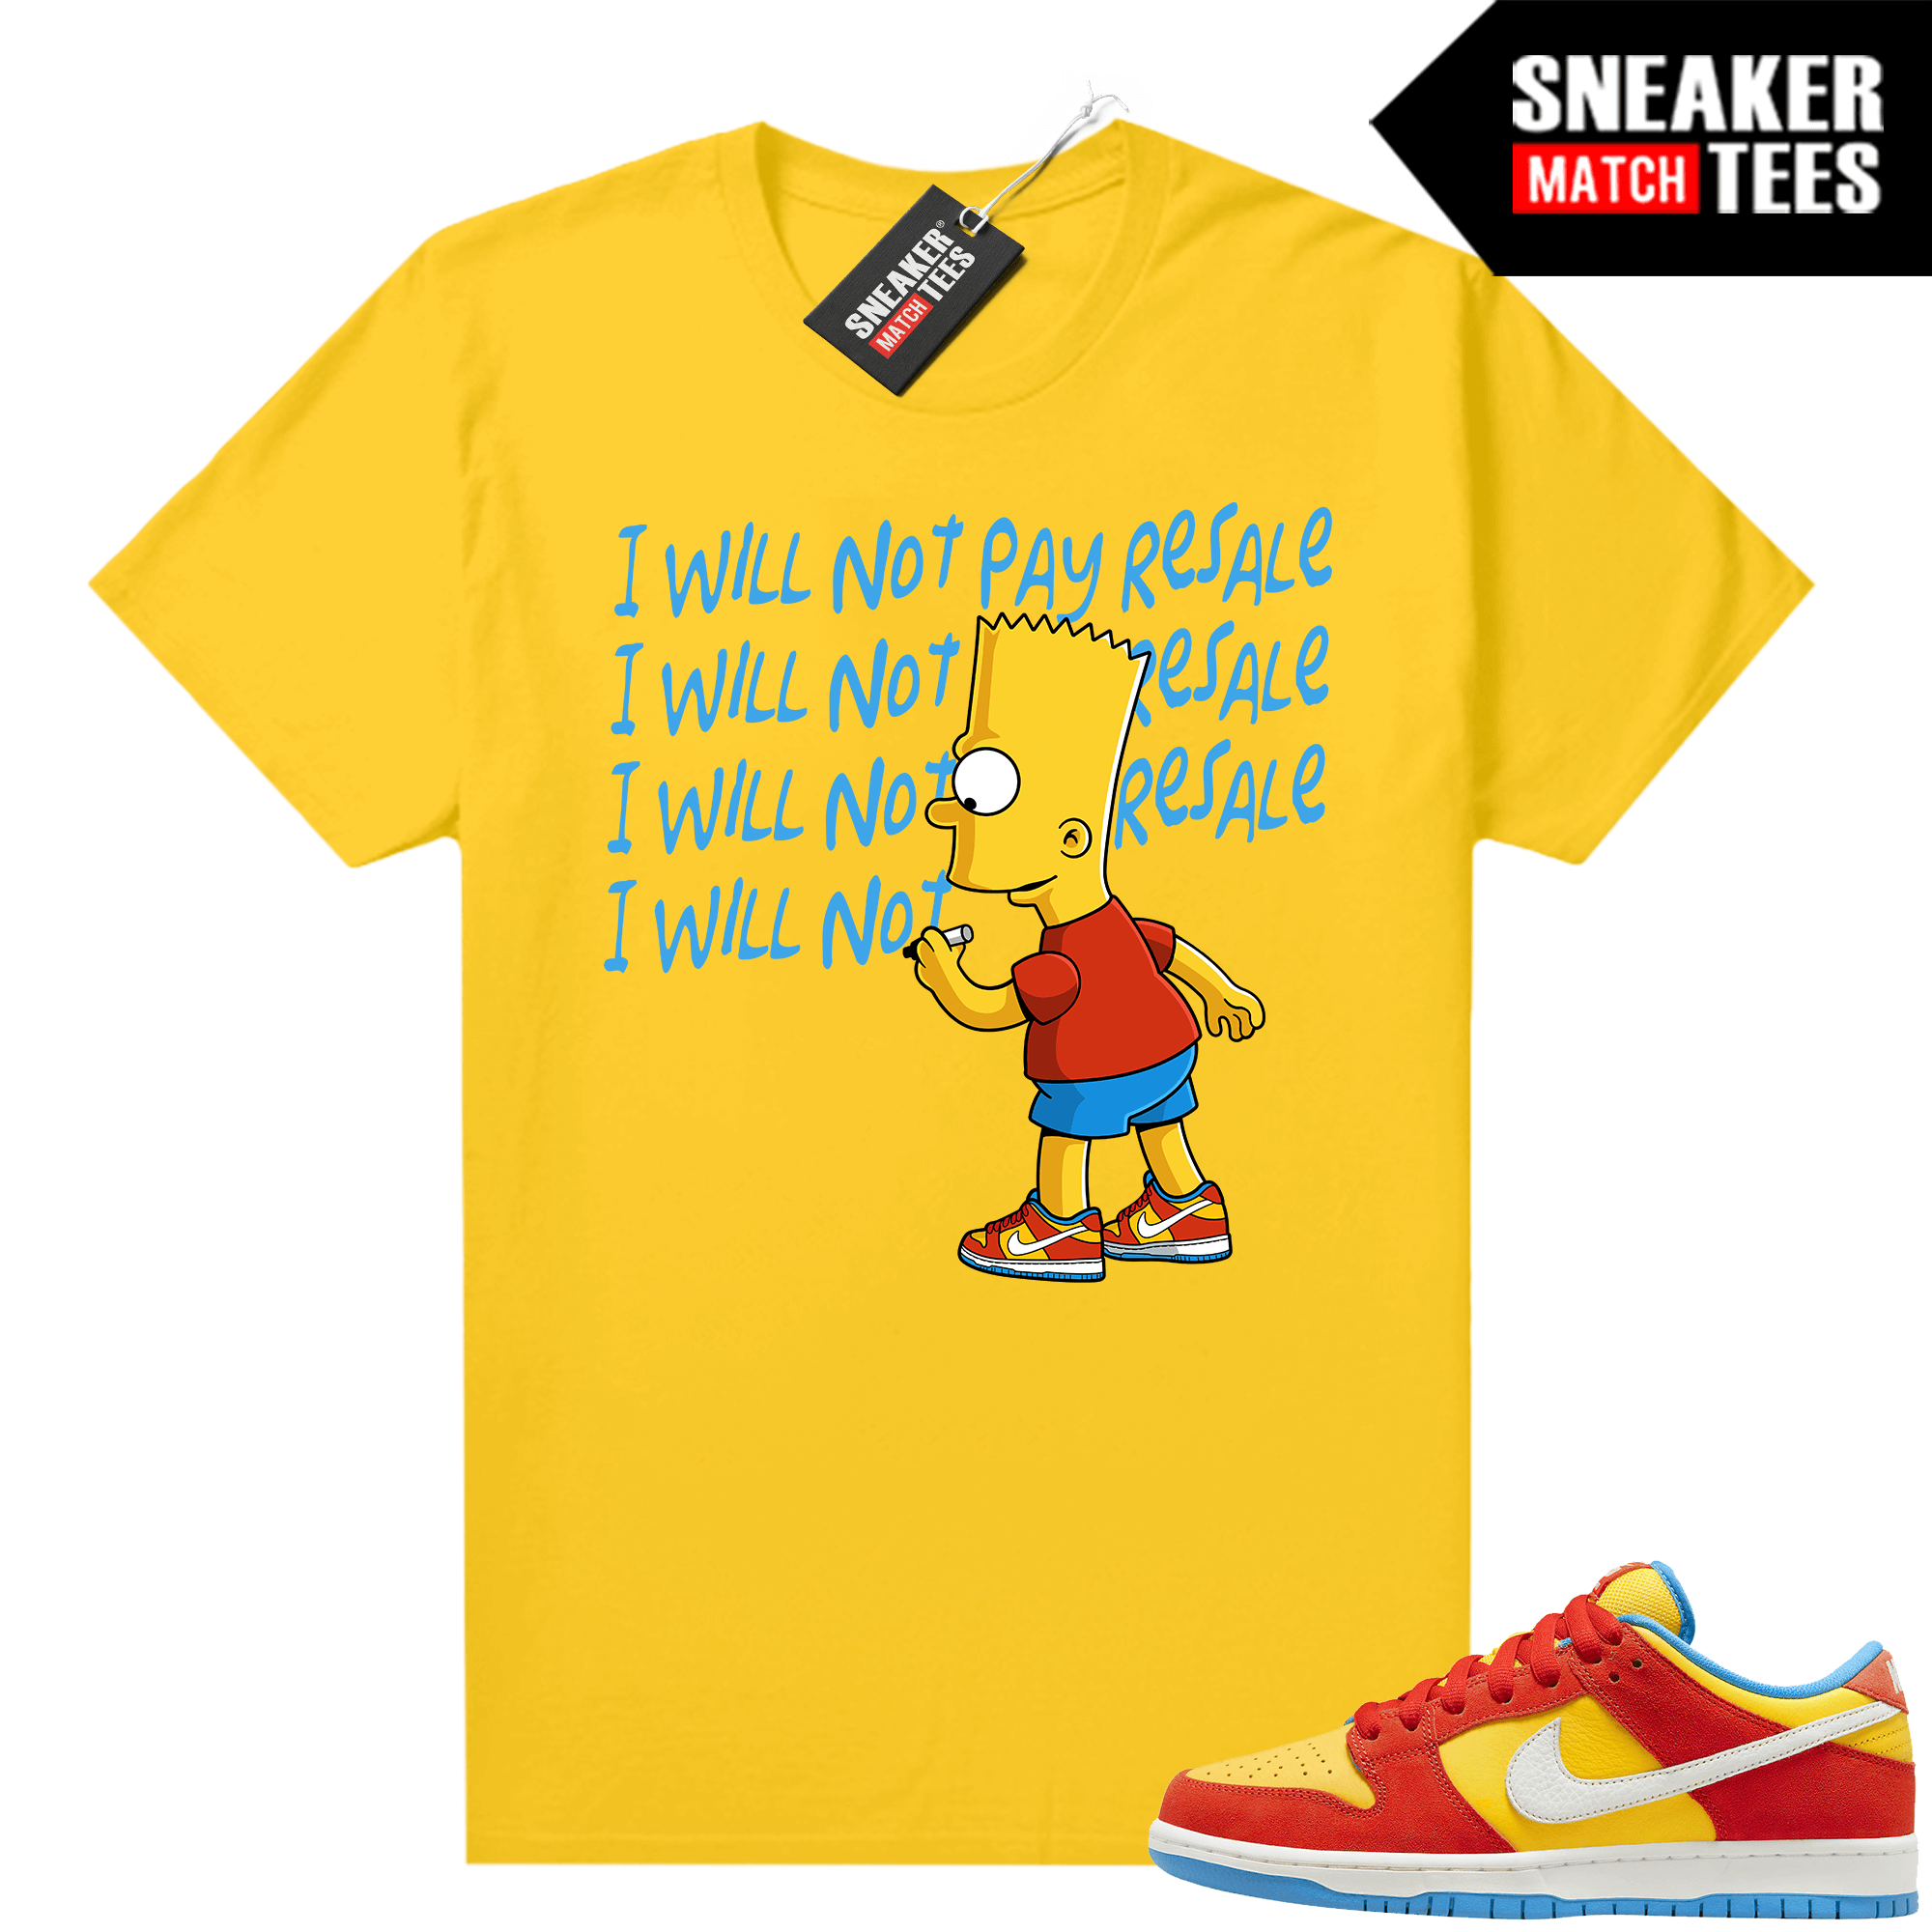 Nike SB Dunk Bart match shirts